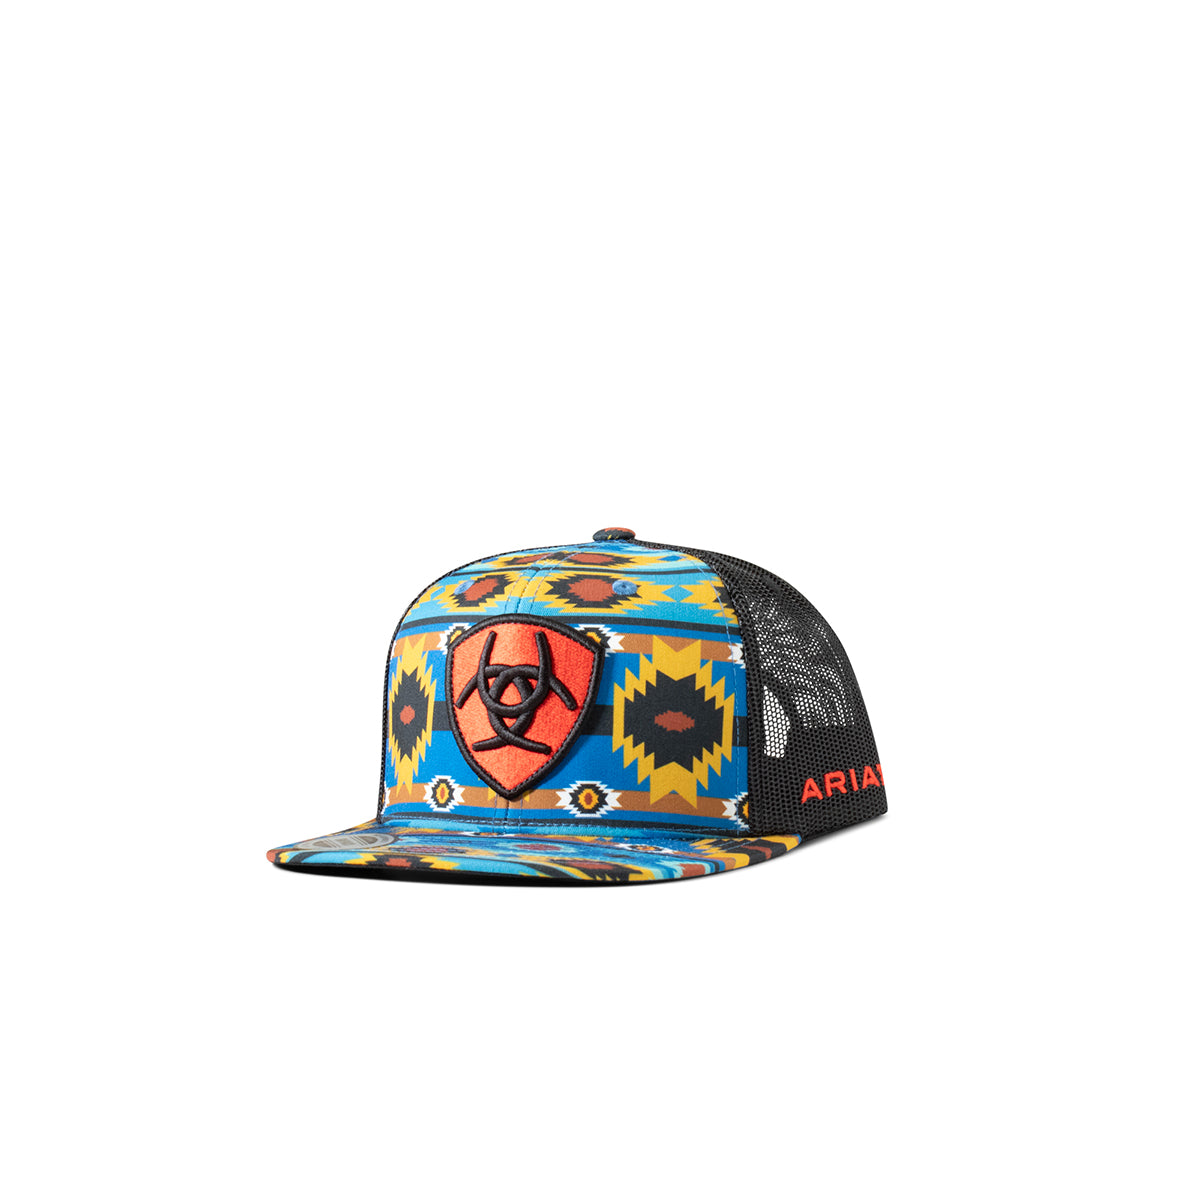 Ariat Youth Flexfit 110 Snapback Cap - Multi-Colored